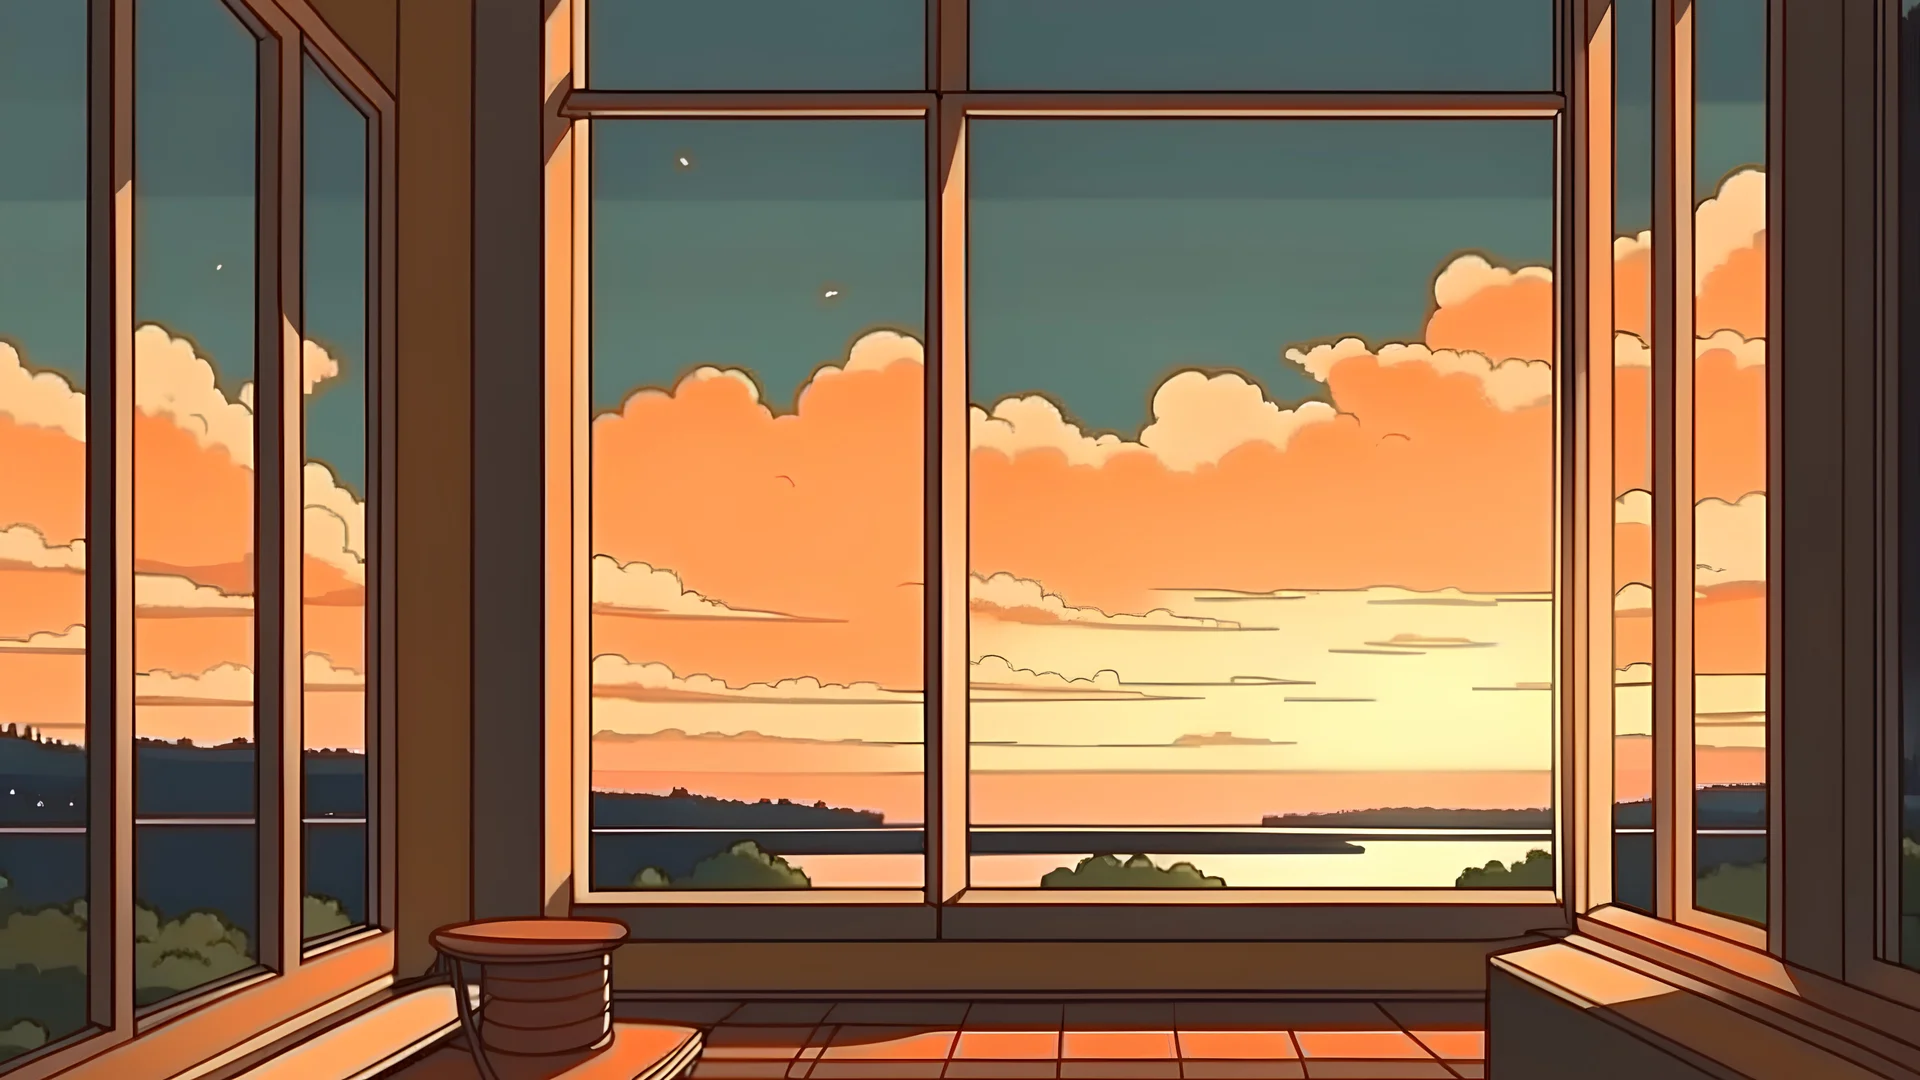 lofi mix youtube video anime style scene background summer window view, no people